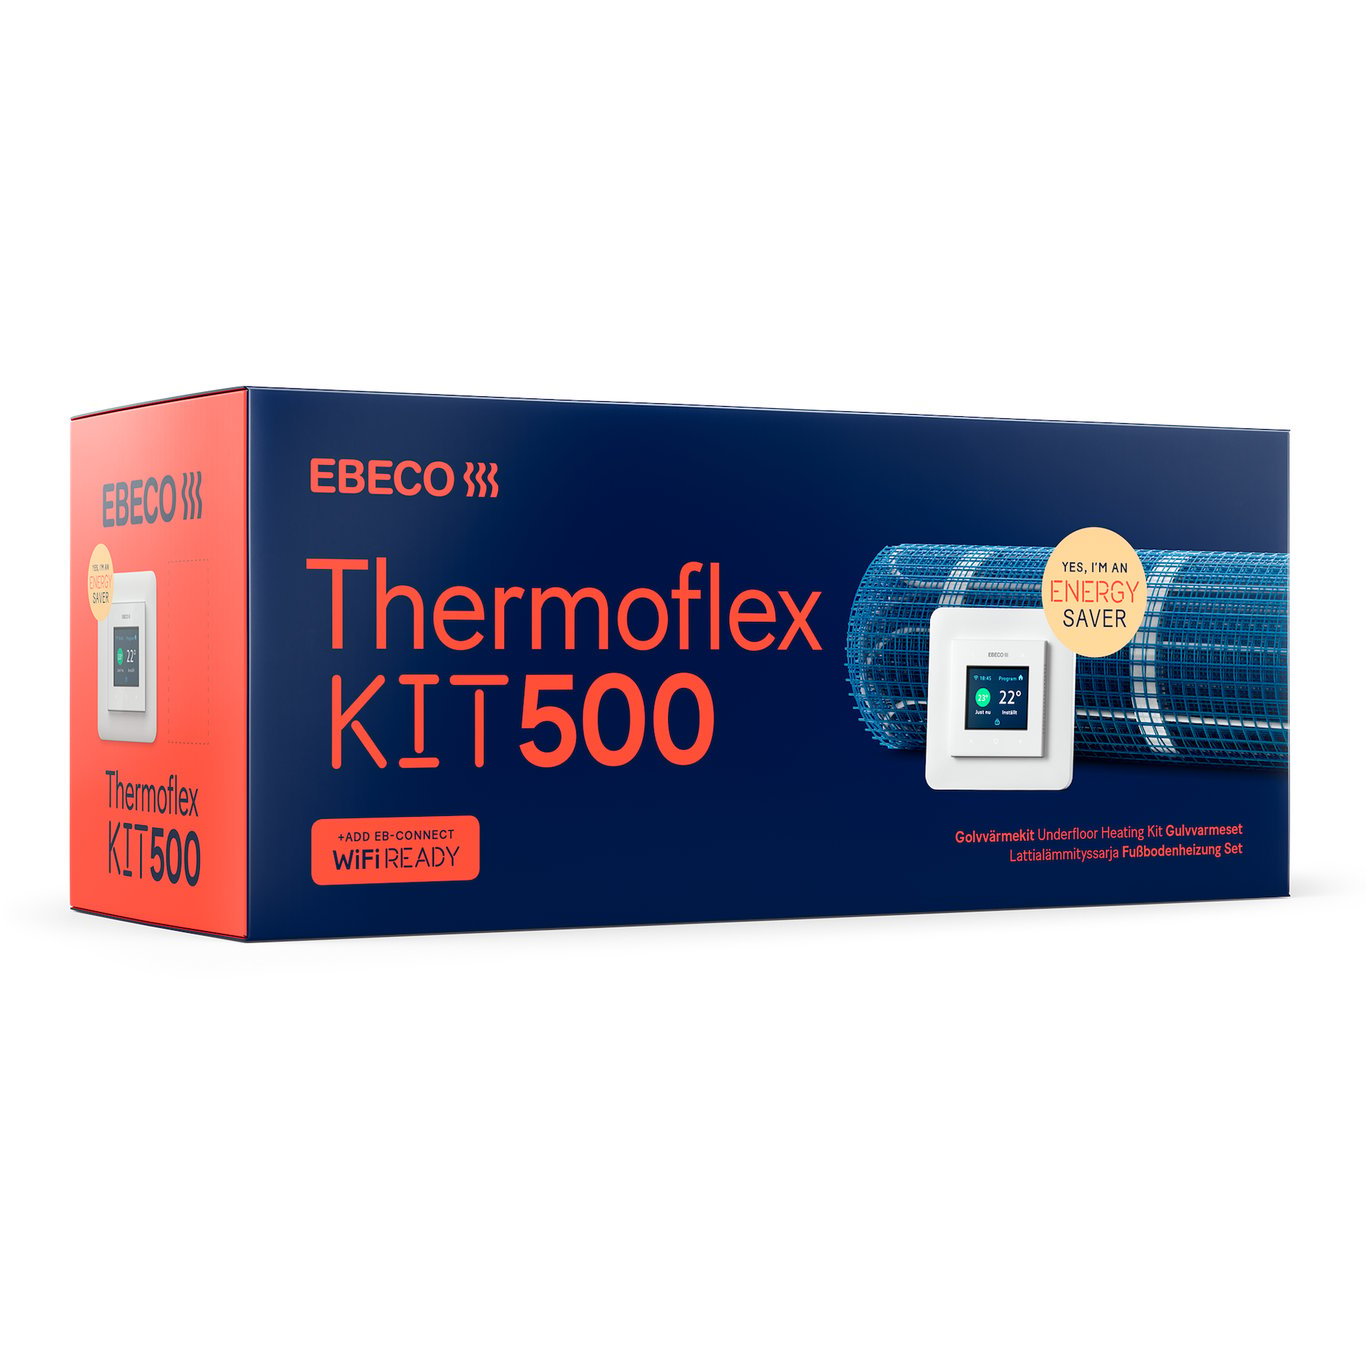 EBECO THERMOFLEX KIT 500 14M2 1700W